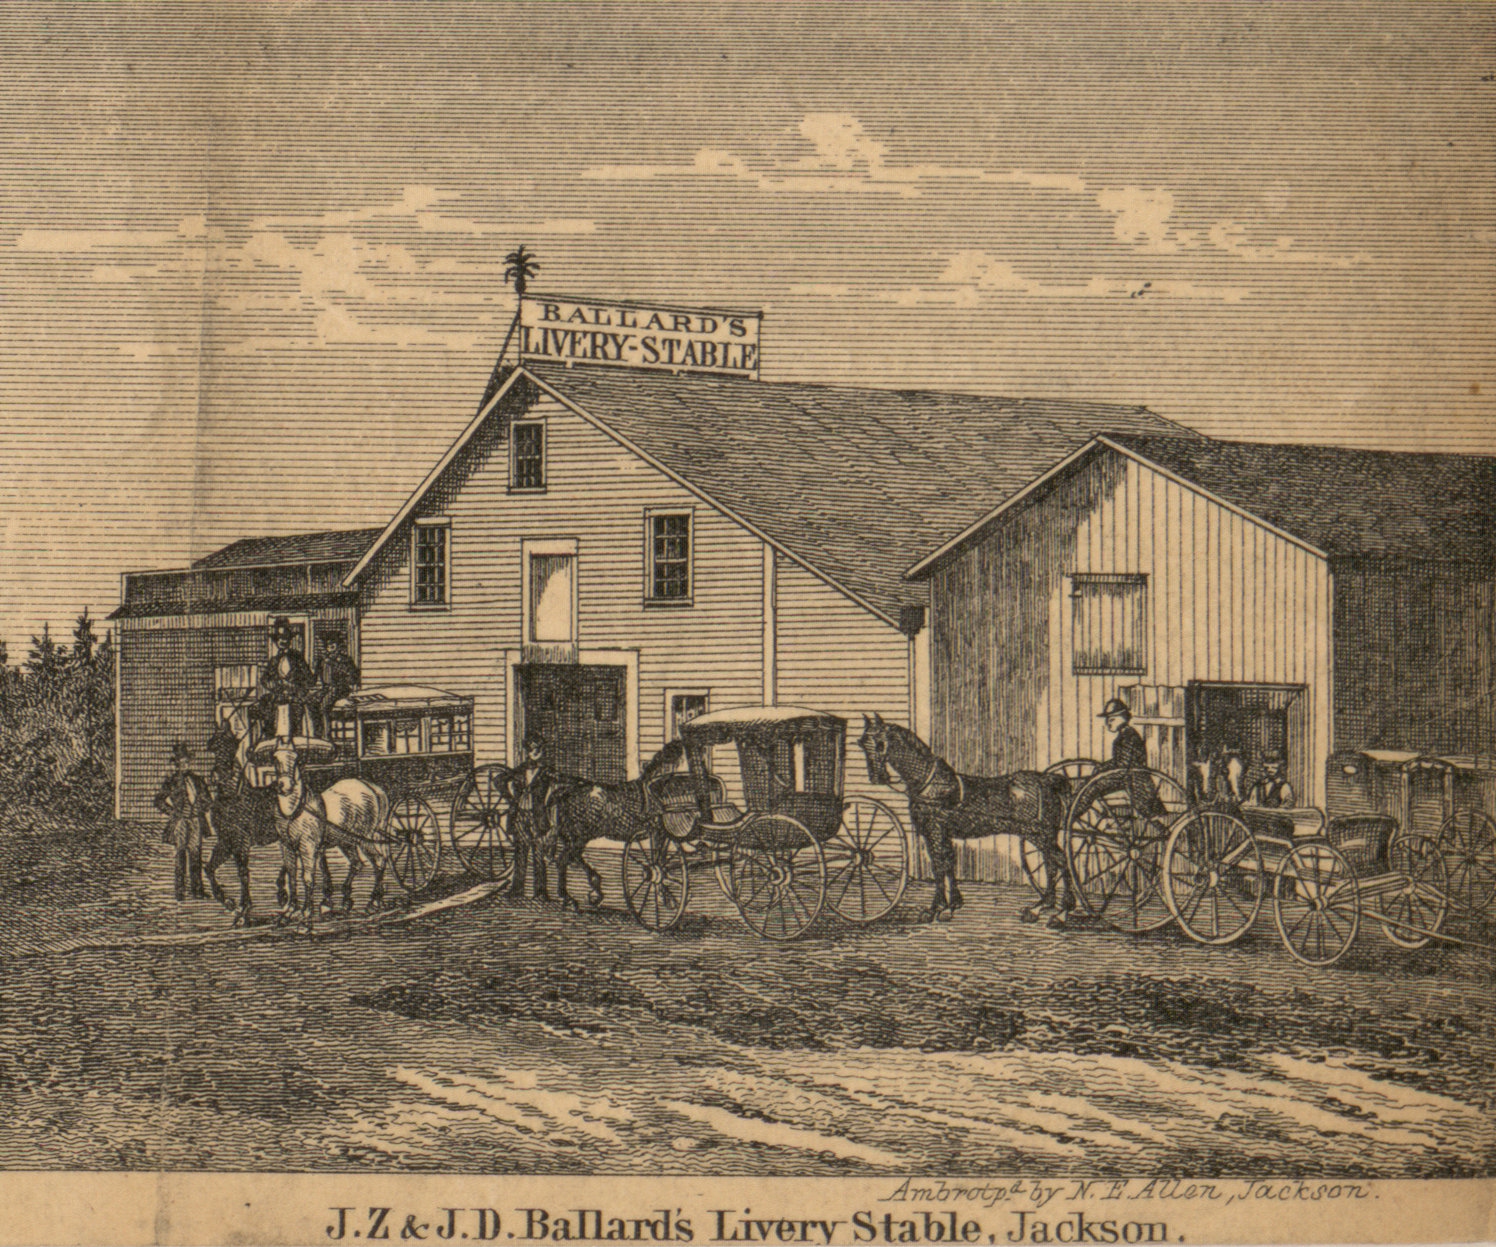 J.Z. & J.D. Ballard's Livery Stables, Jackson, Jackson 1858